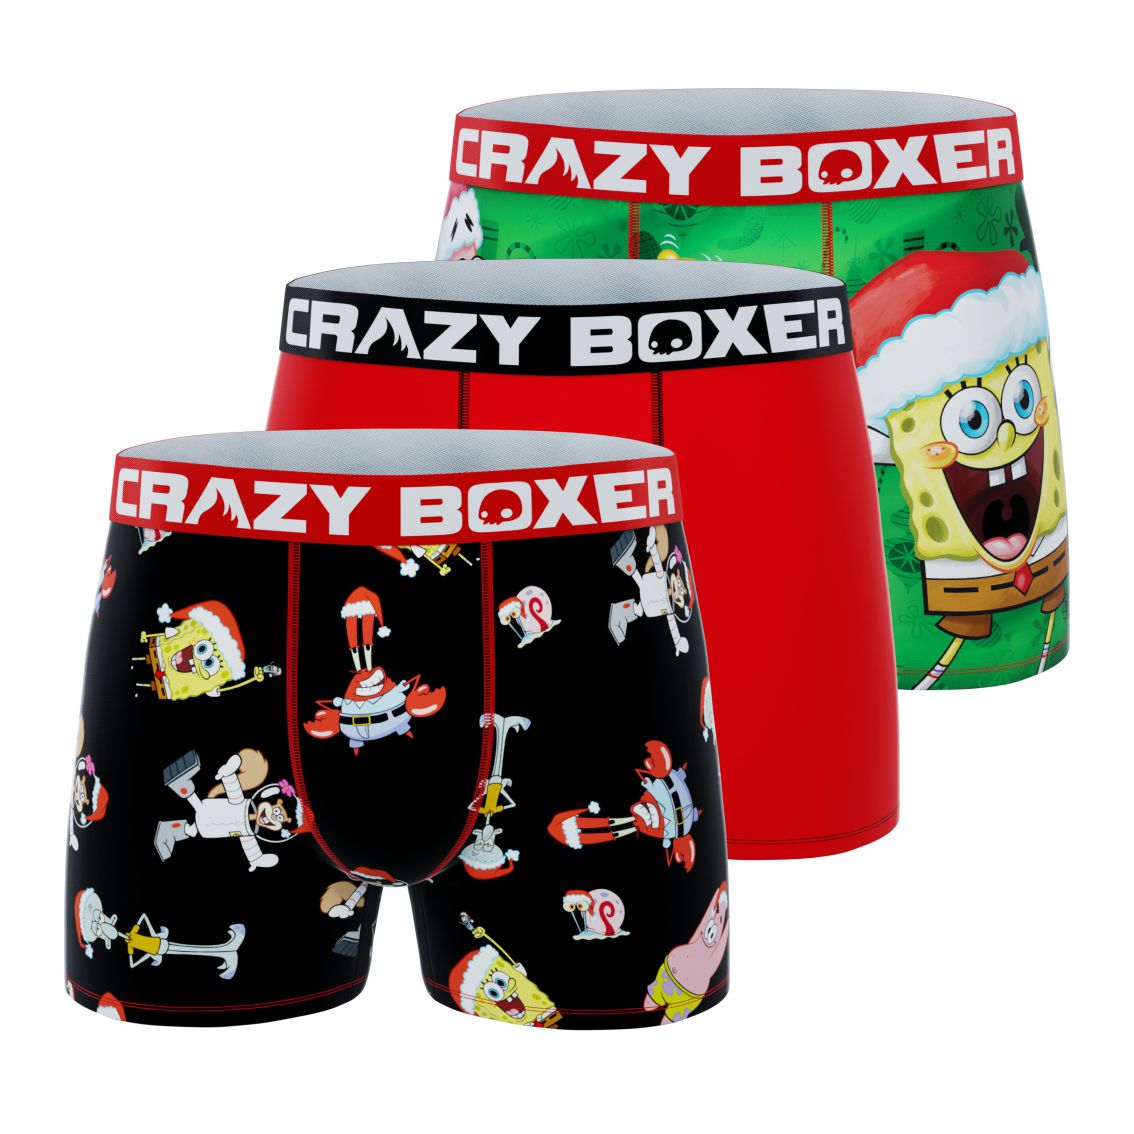 CRAZYBOXER SpongeBob Patrick & Group Men's Boxer Briefs (3 pack